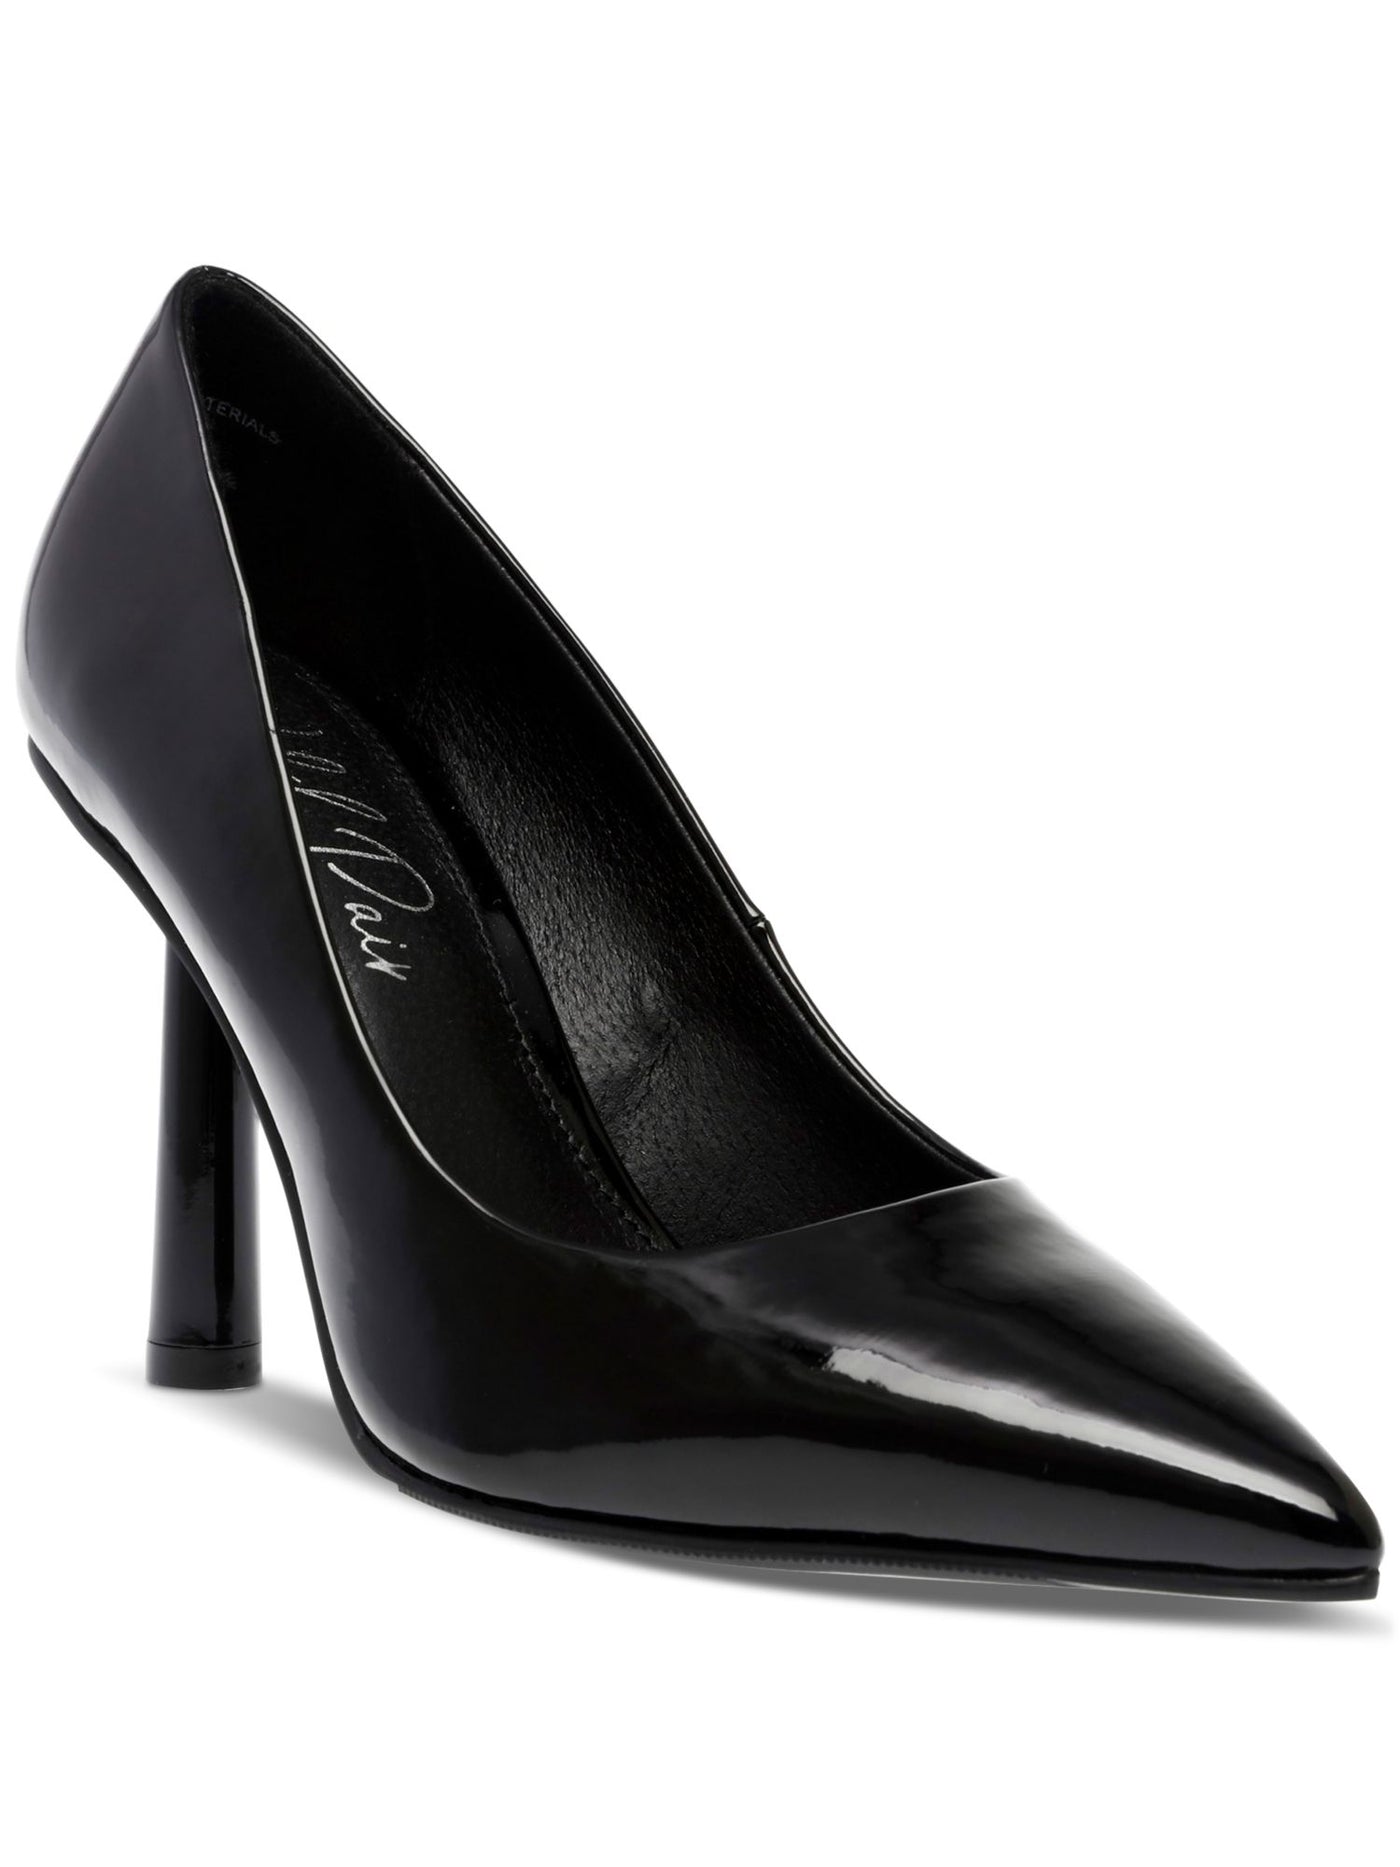 WILD PAIR Womens Black Slip Resistant Comfort Taraa Pointed Toe Stiletto Slip On Pumps Shoes 9.5 M